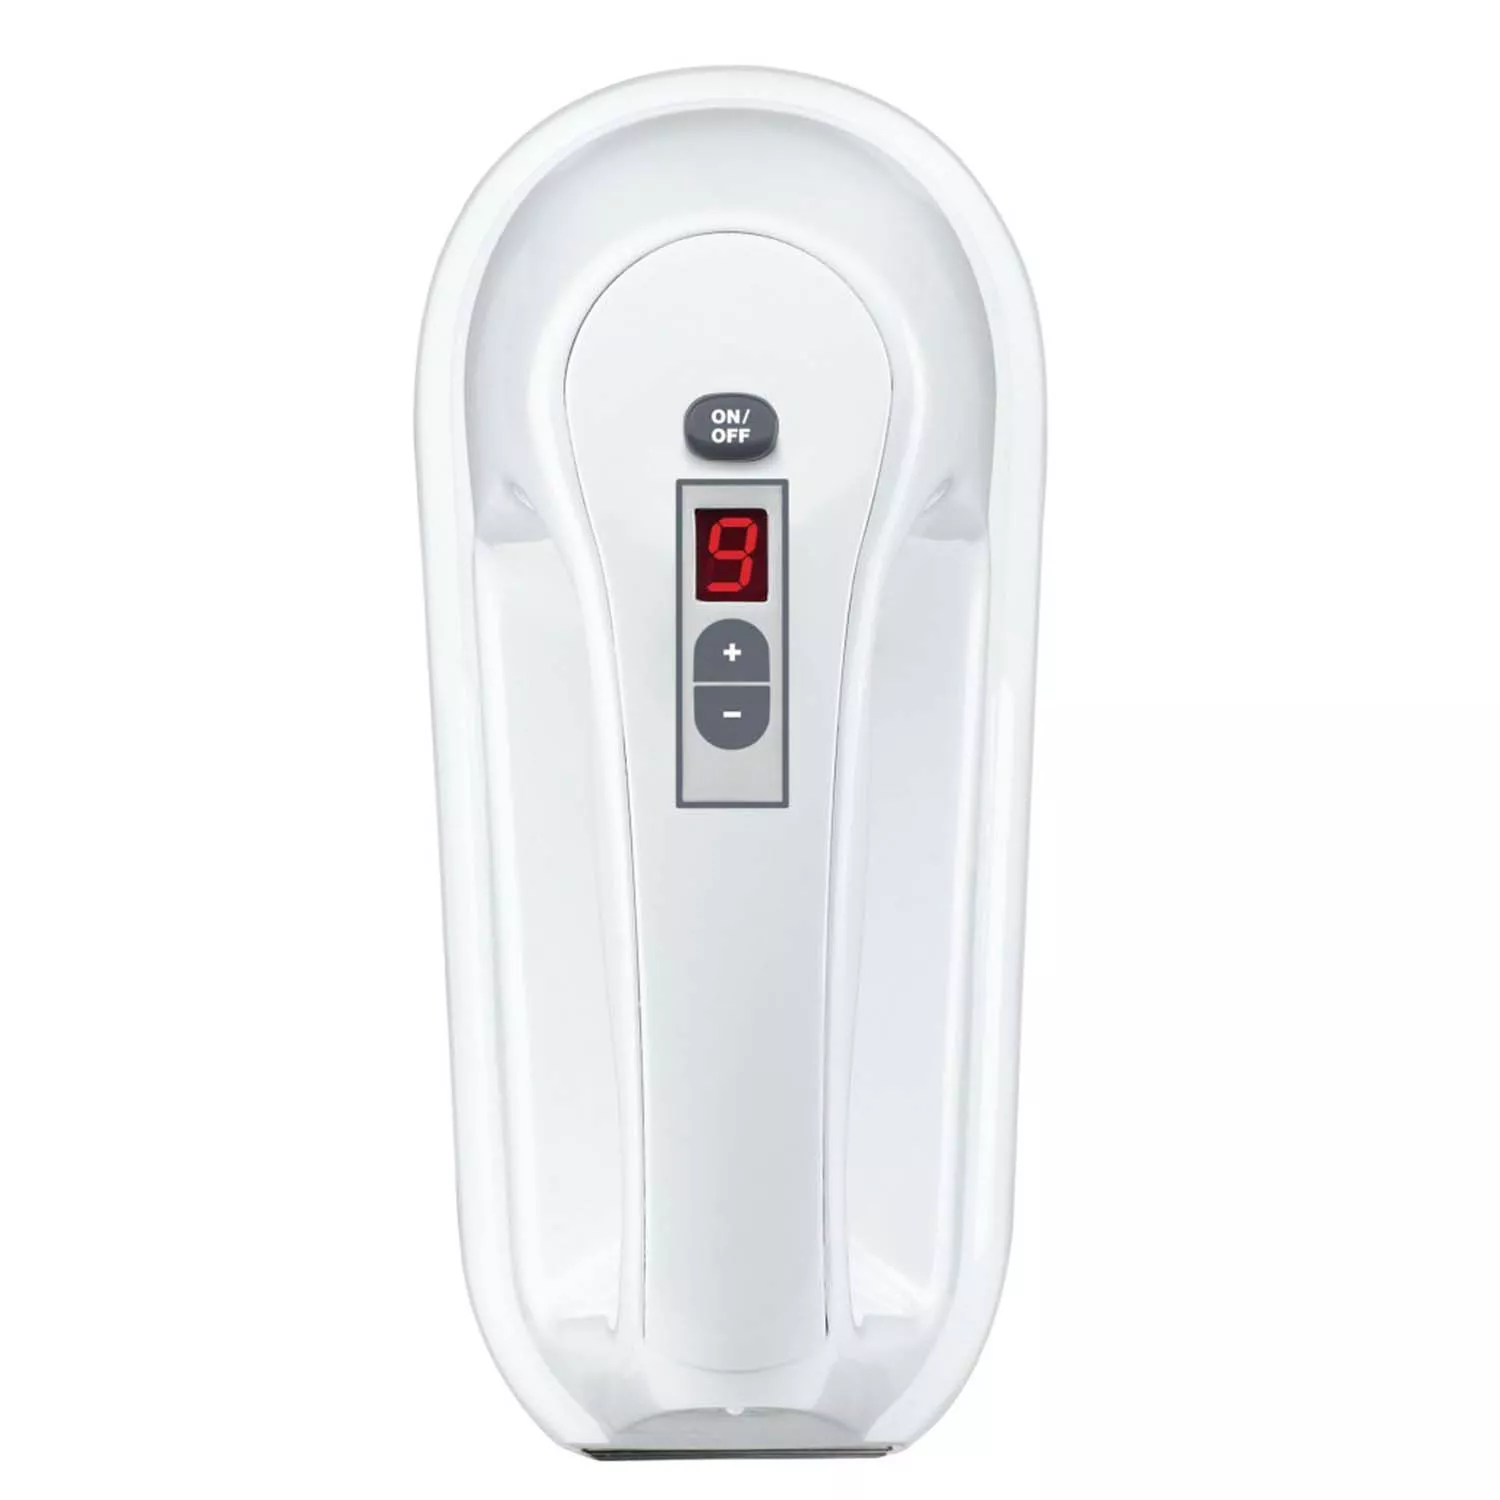 Cuisinart - Power Advantage 6-Speed Hand Mixer (White)